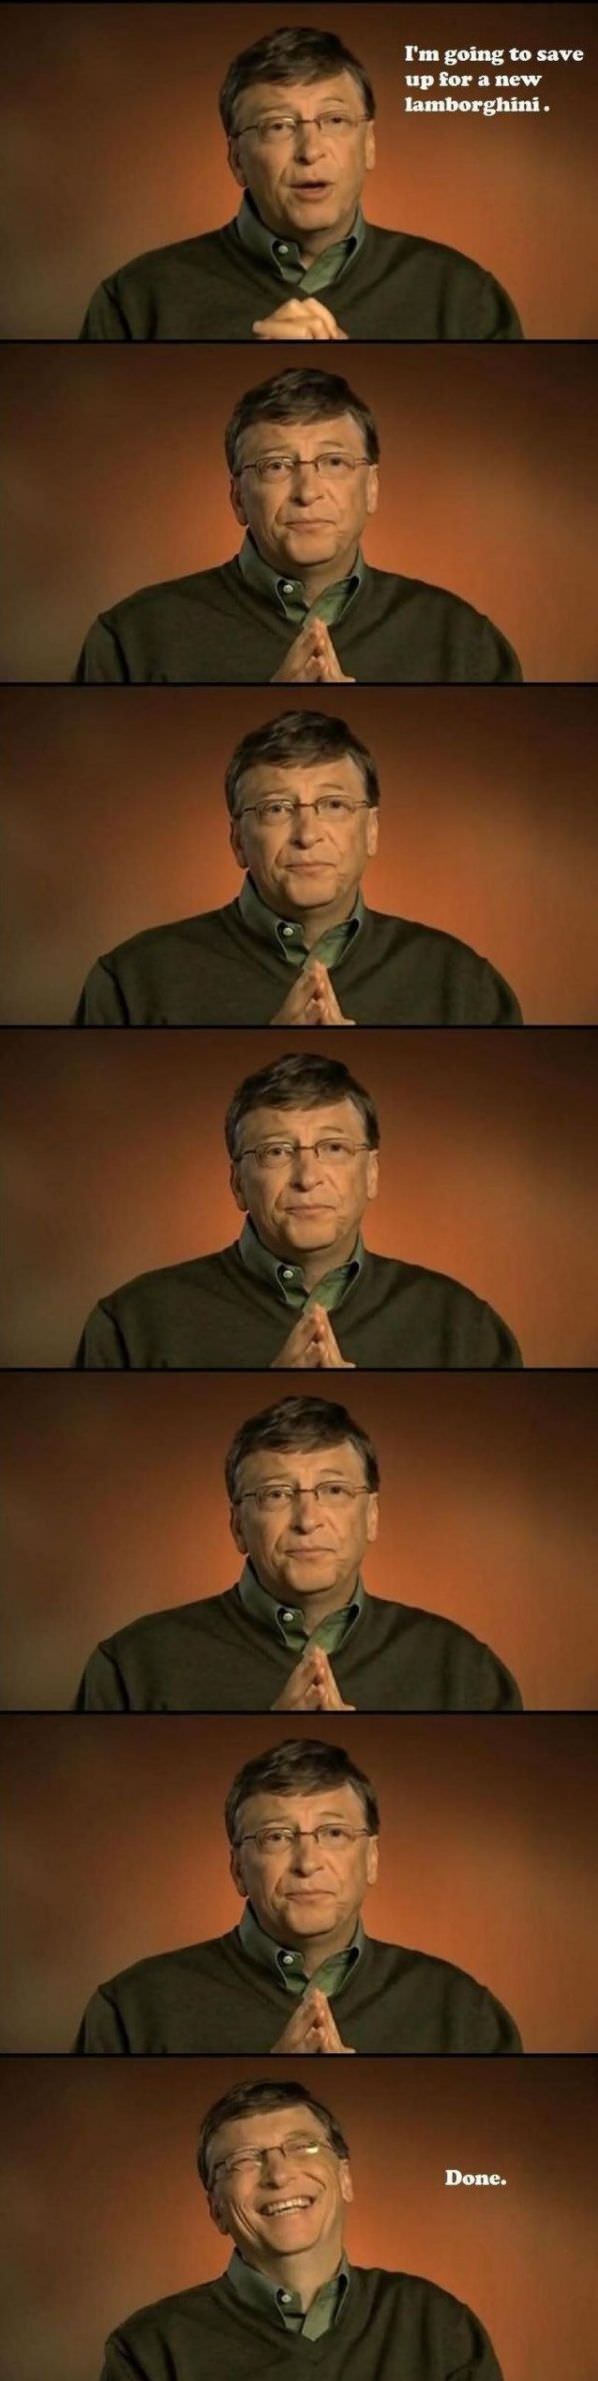 Bill Gates Saving